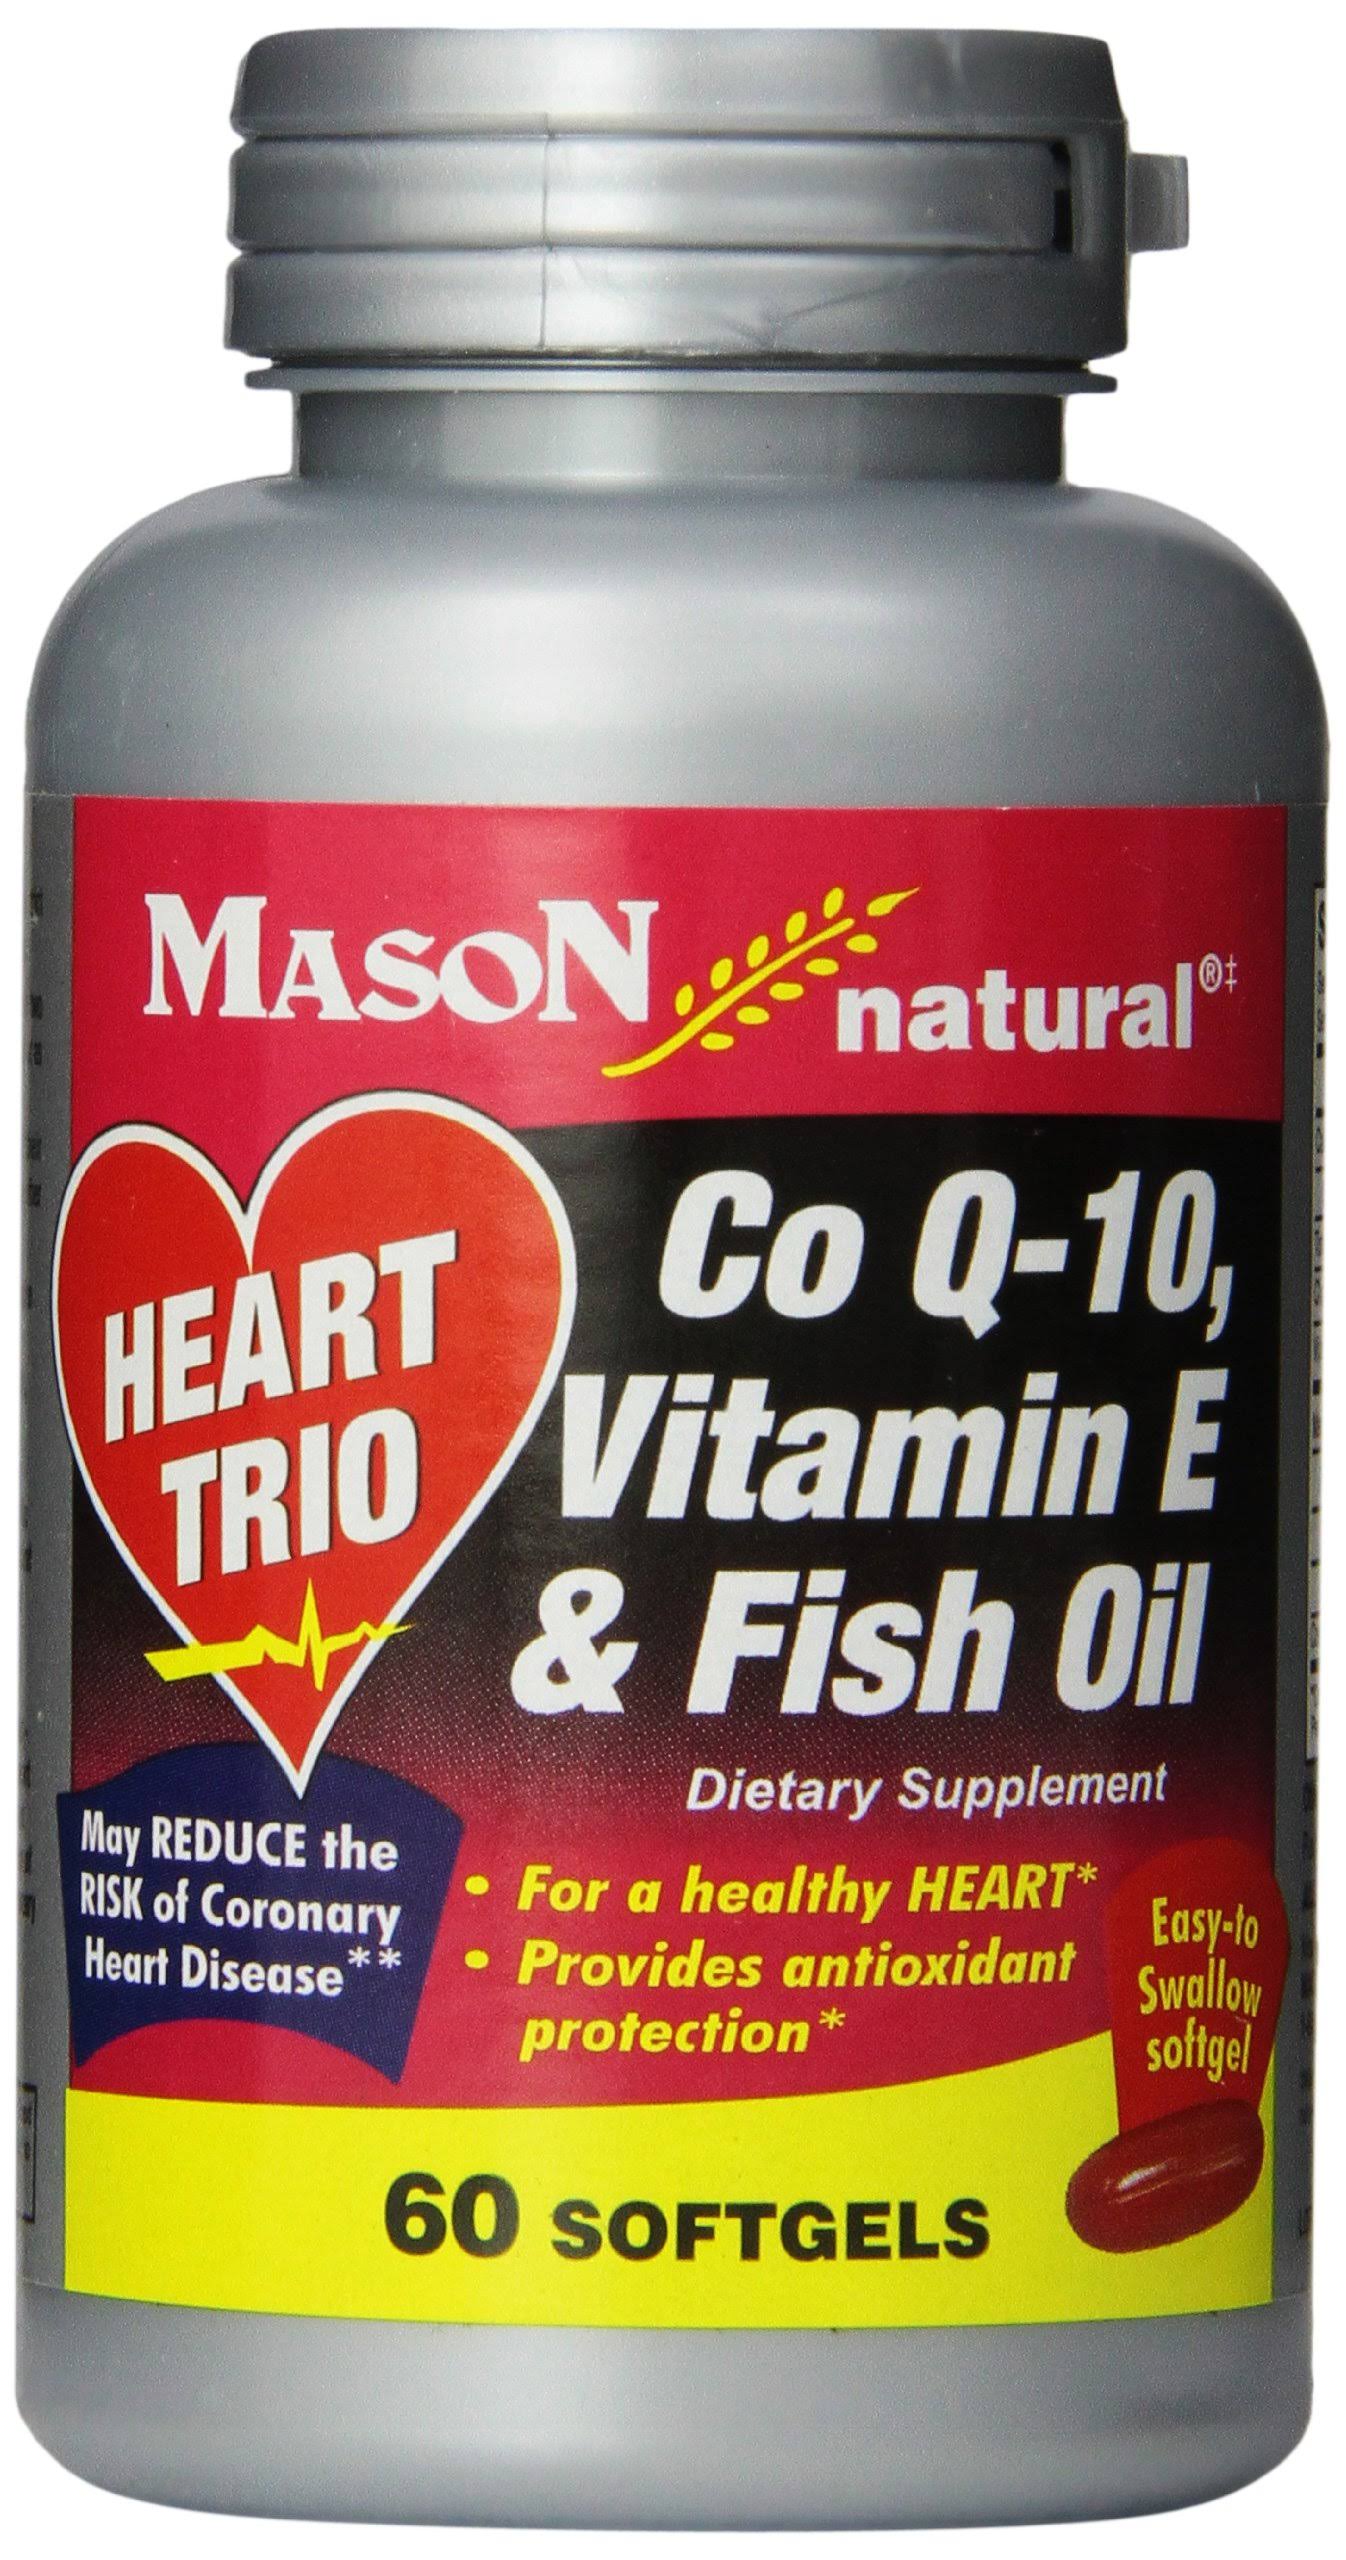 Mason Naturals Heart Trio Coq10 Vitamin E and Fish Oil Dietary Supplement - 60 Softgels